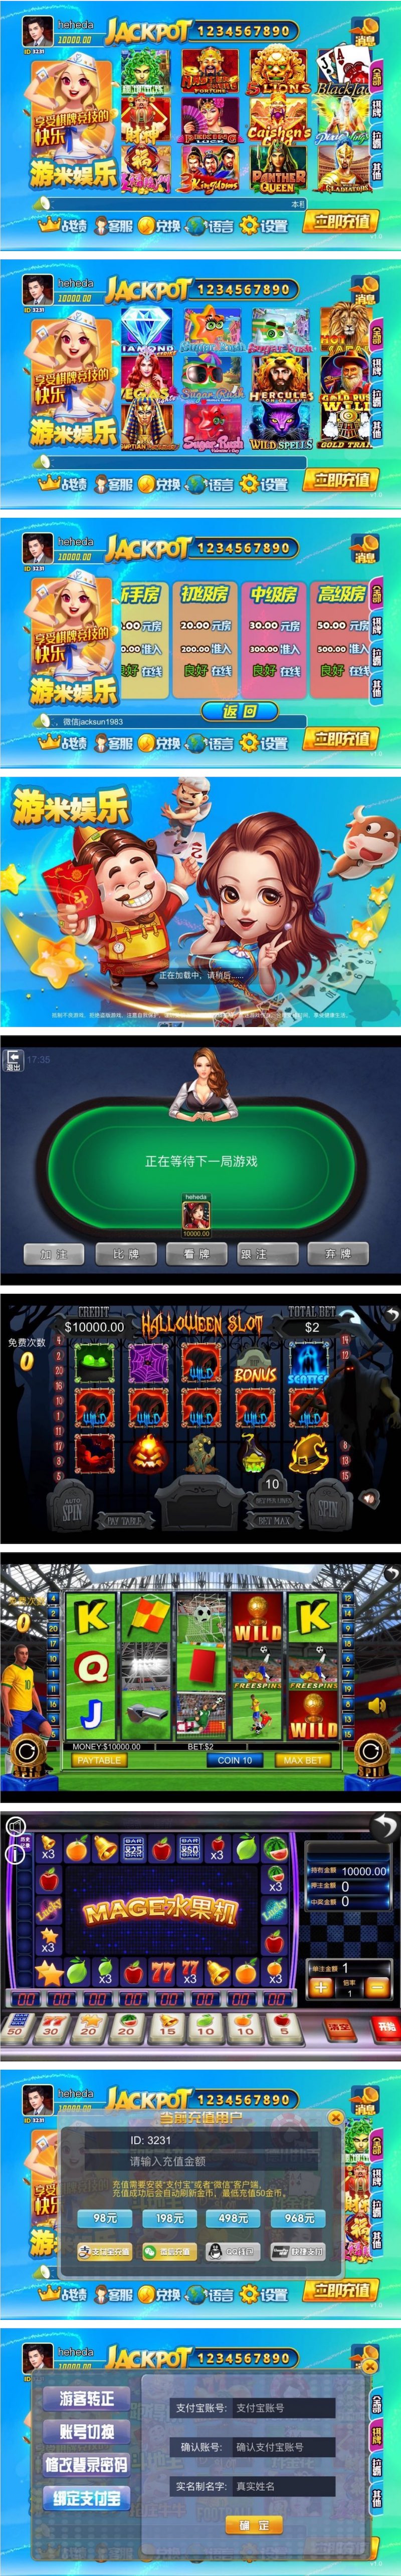 H5游米娱乐拉霸游戏 在线充值接口可后台控制带兑换功能。插图